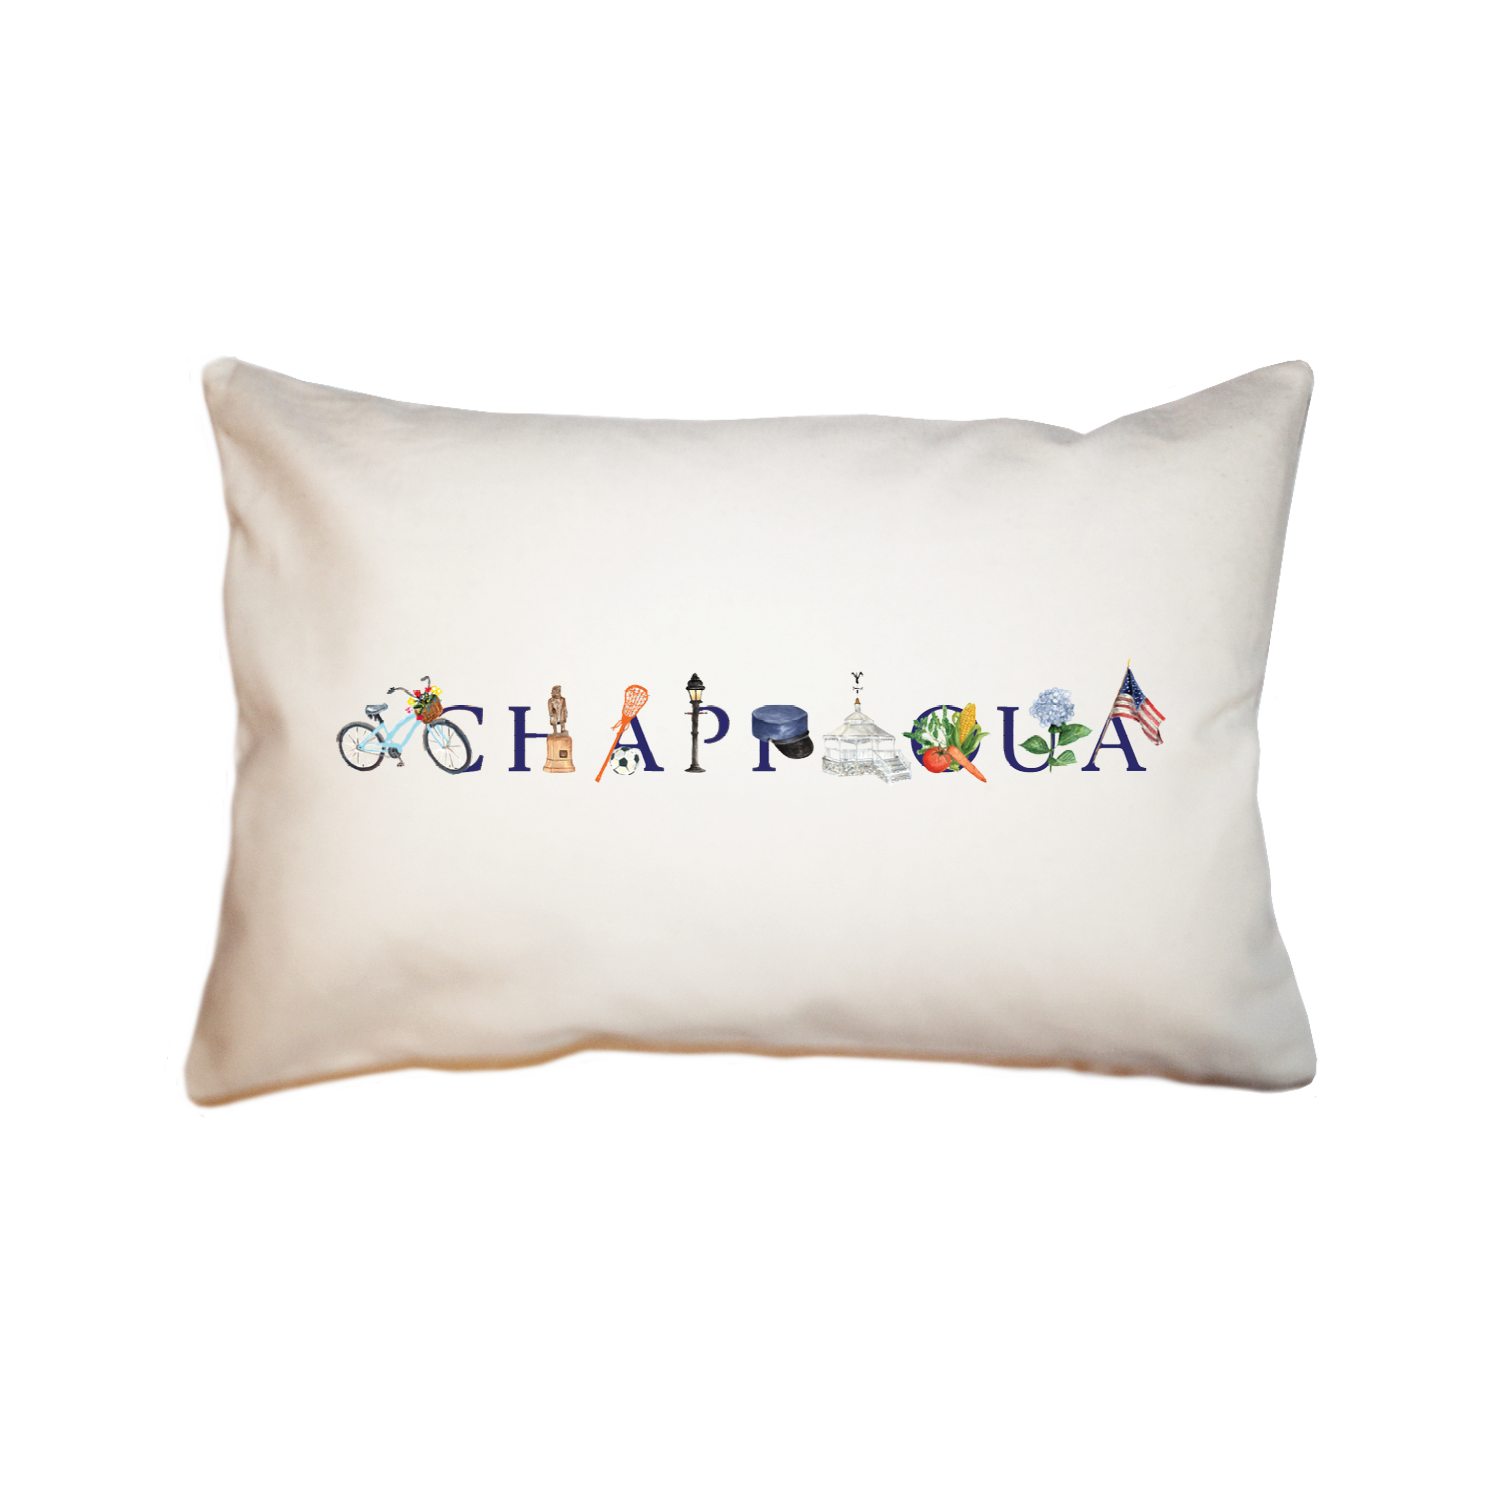 chappaqua large rectangle pillow